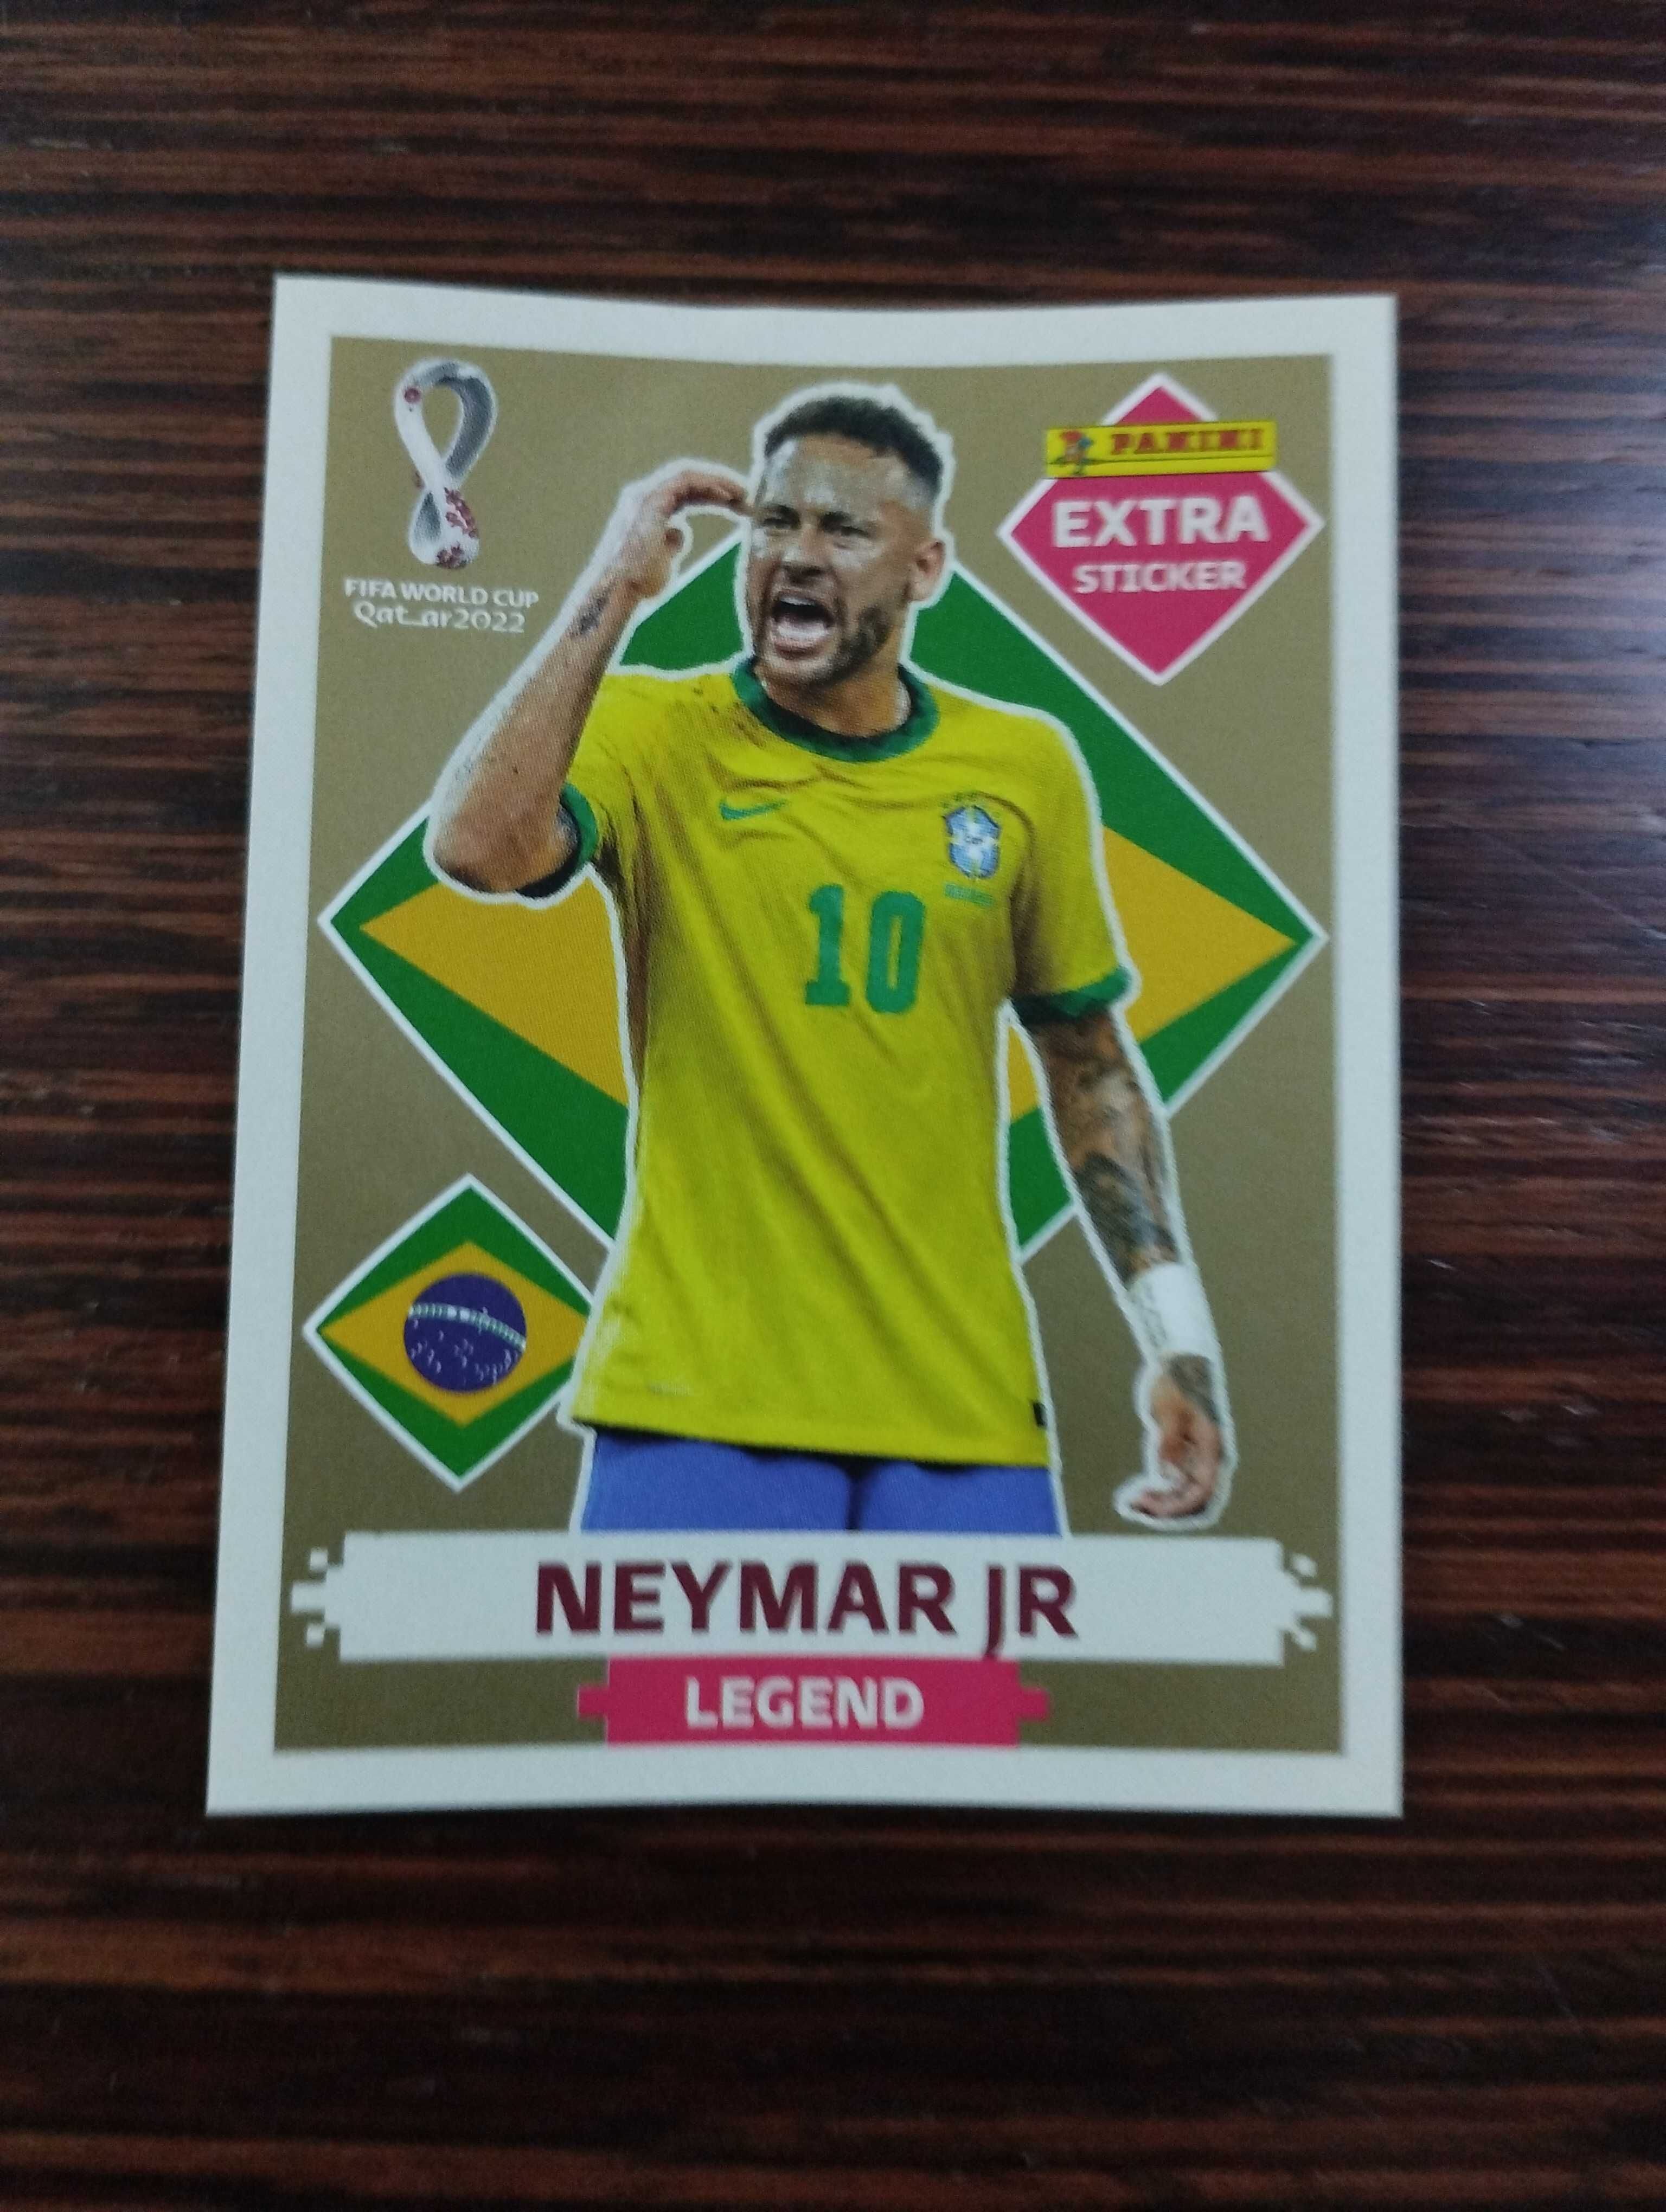 Legend do Neymar Jr dourada